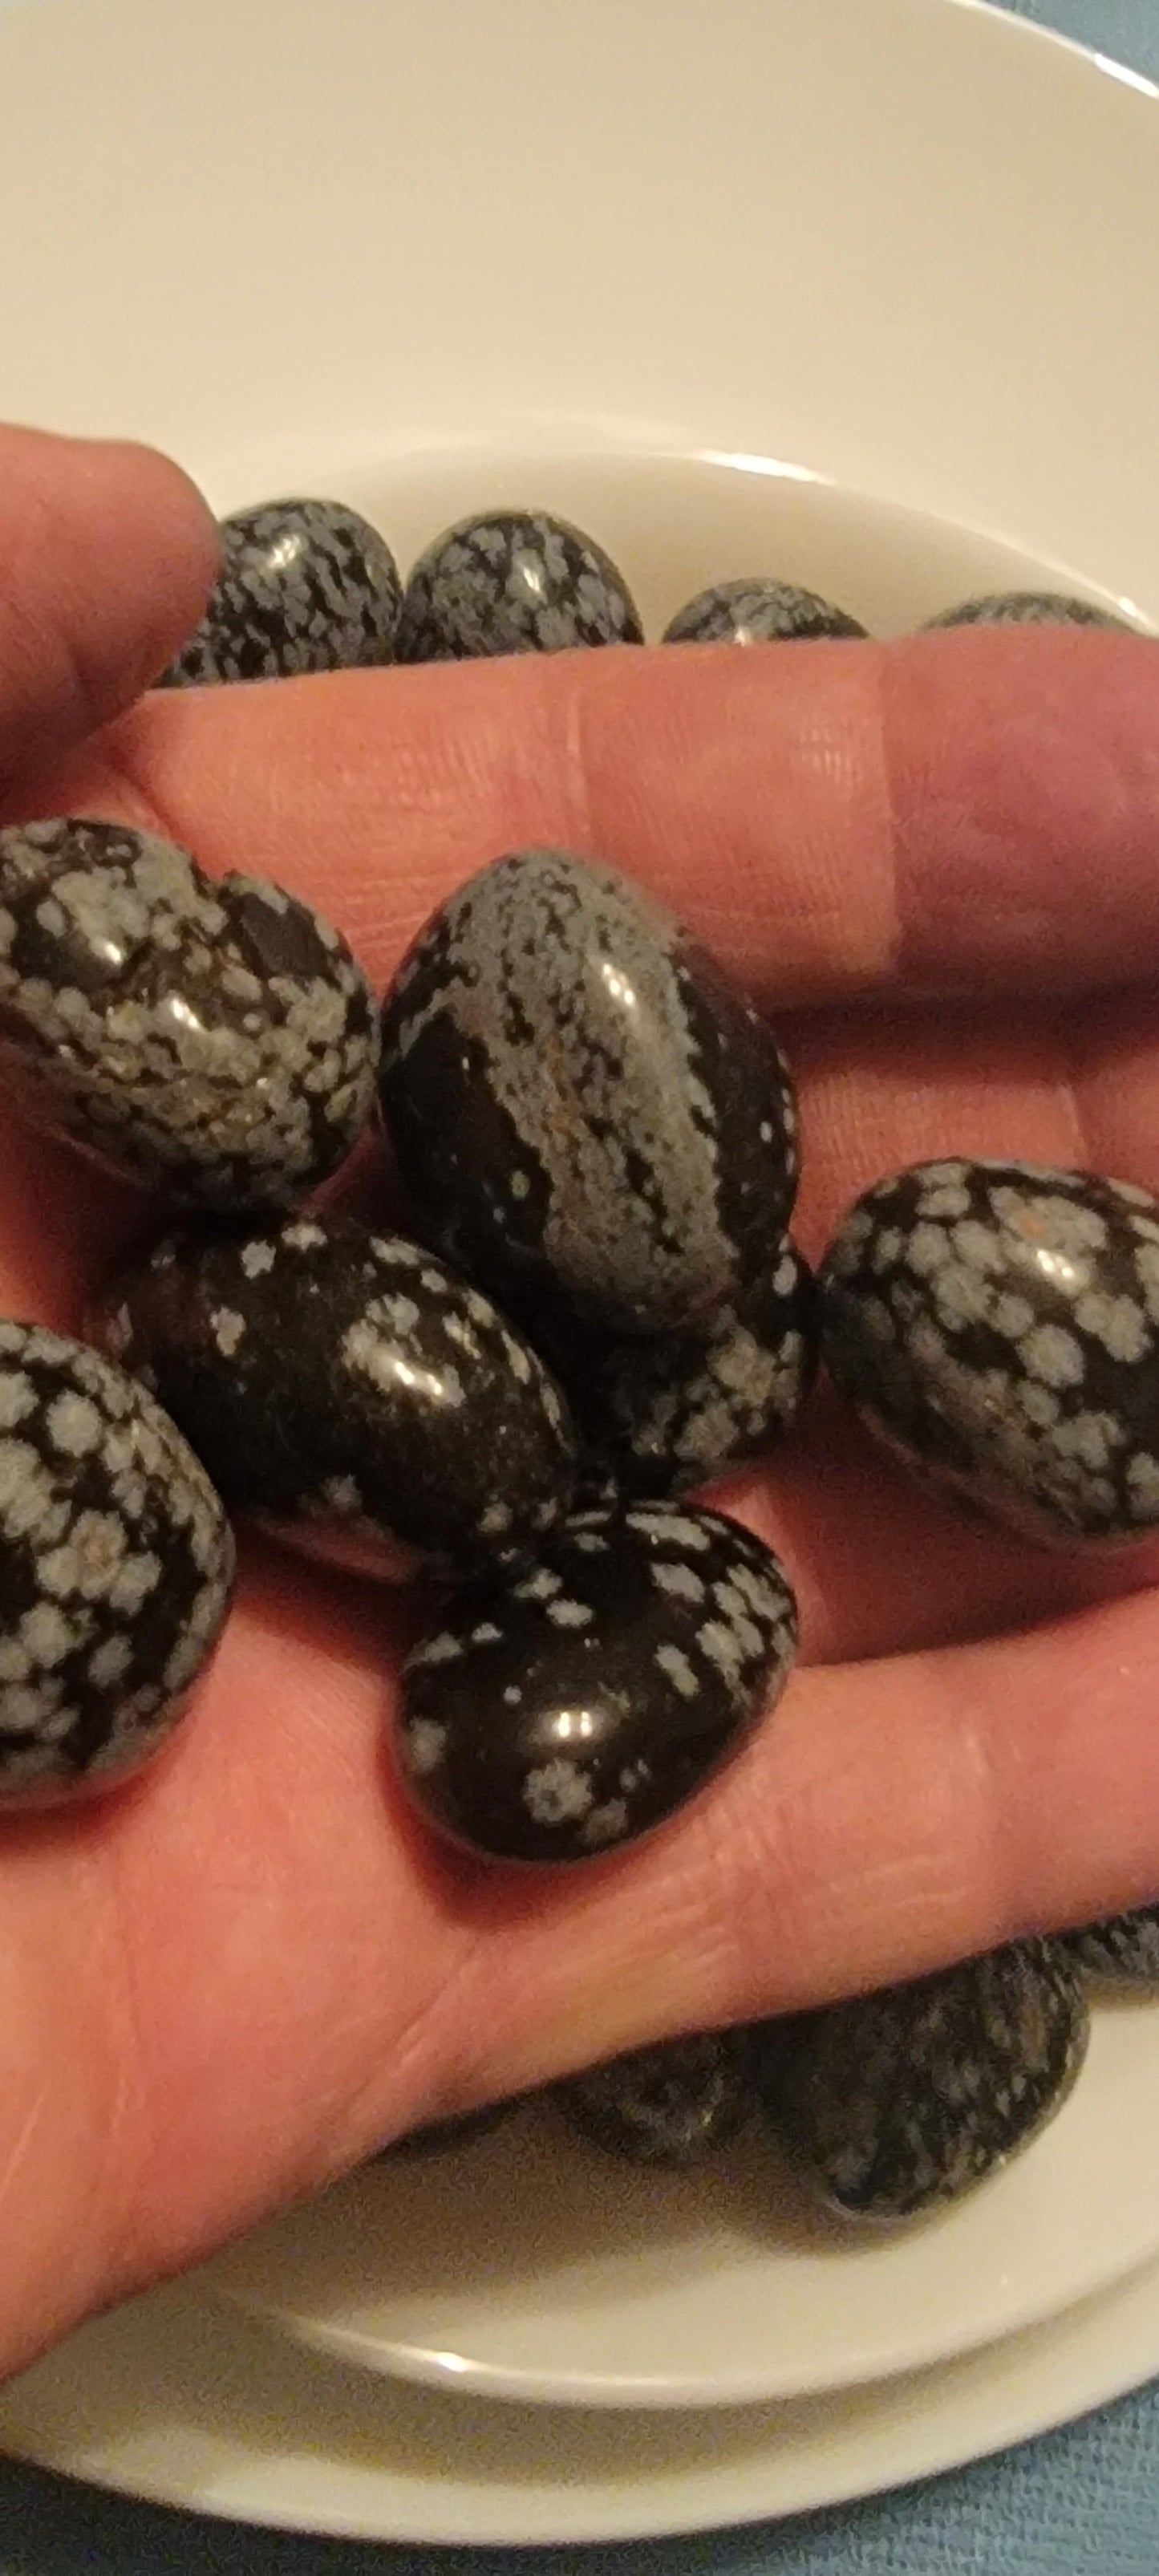 Snowflake Obsidian Tumbled Stone, 1 Pound Bag (Approx. 20-30 mm) WT-0132